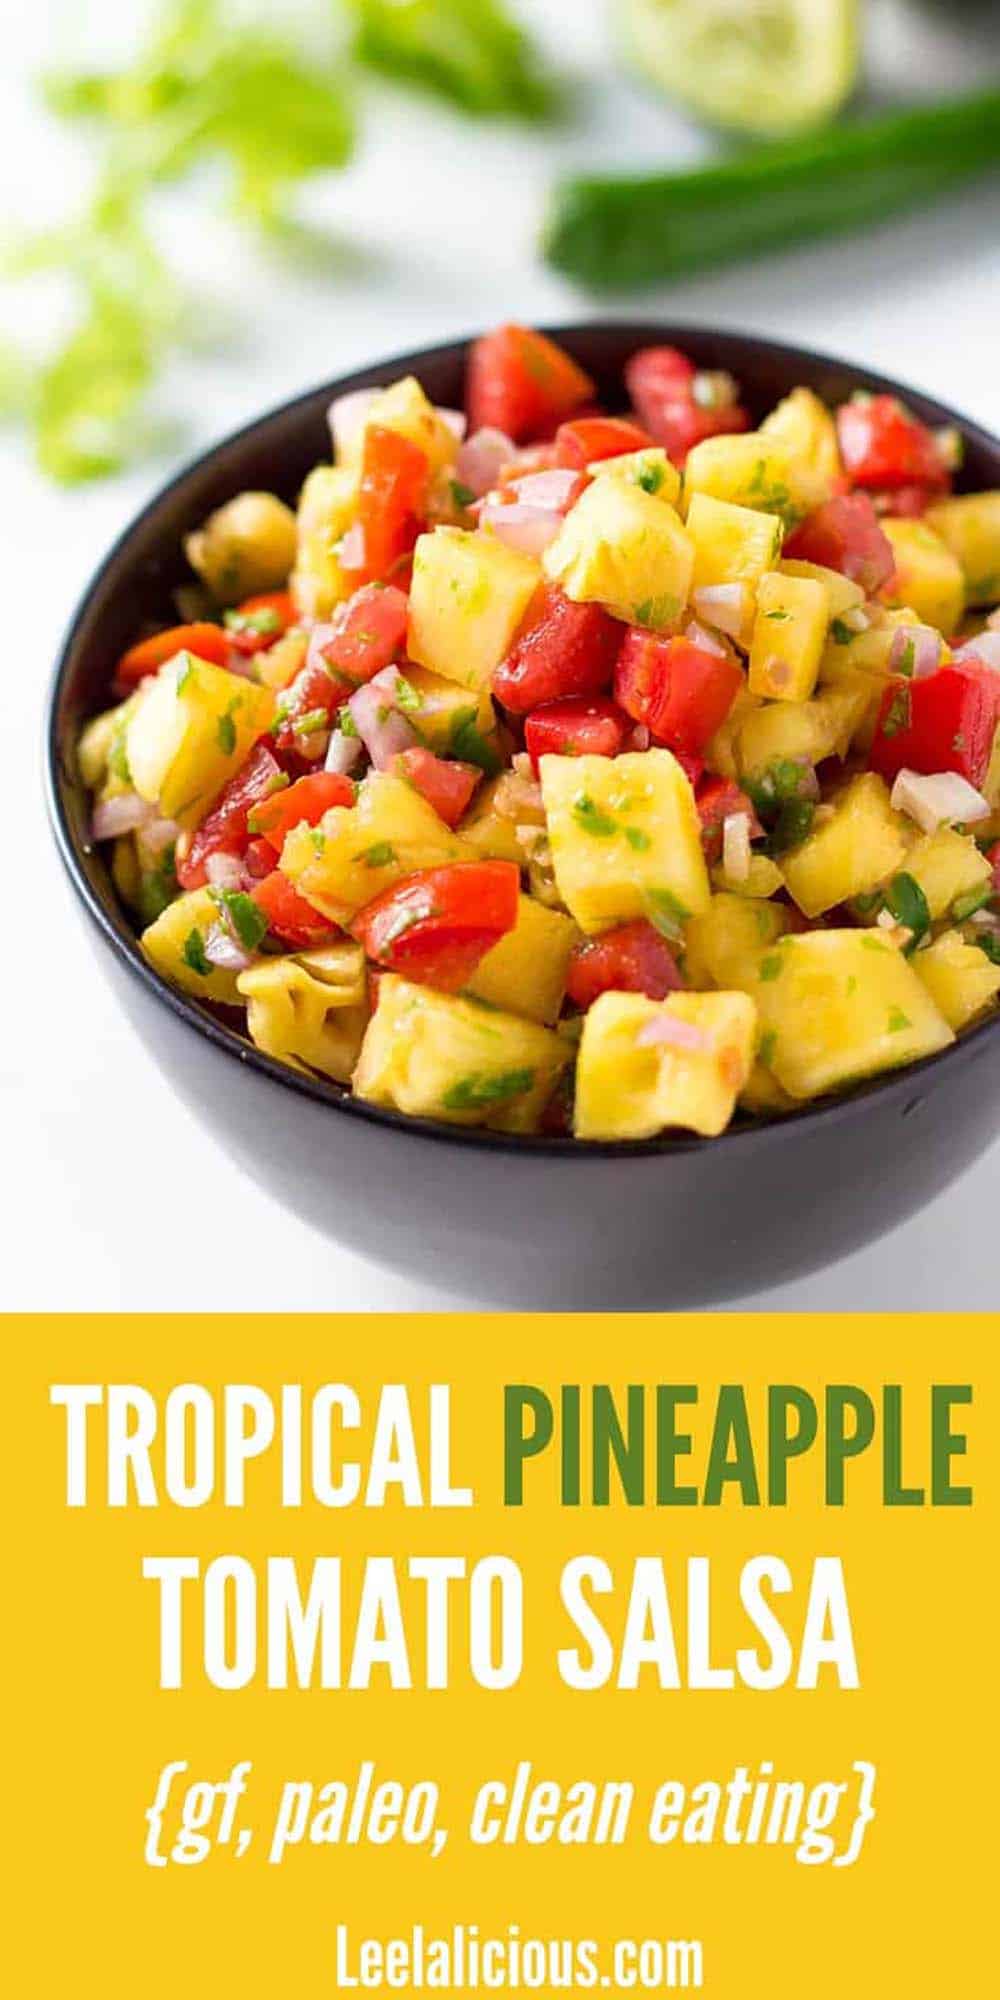 Pineapple Tomato Salsa Recipe